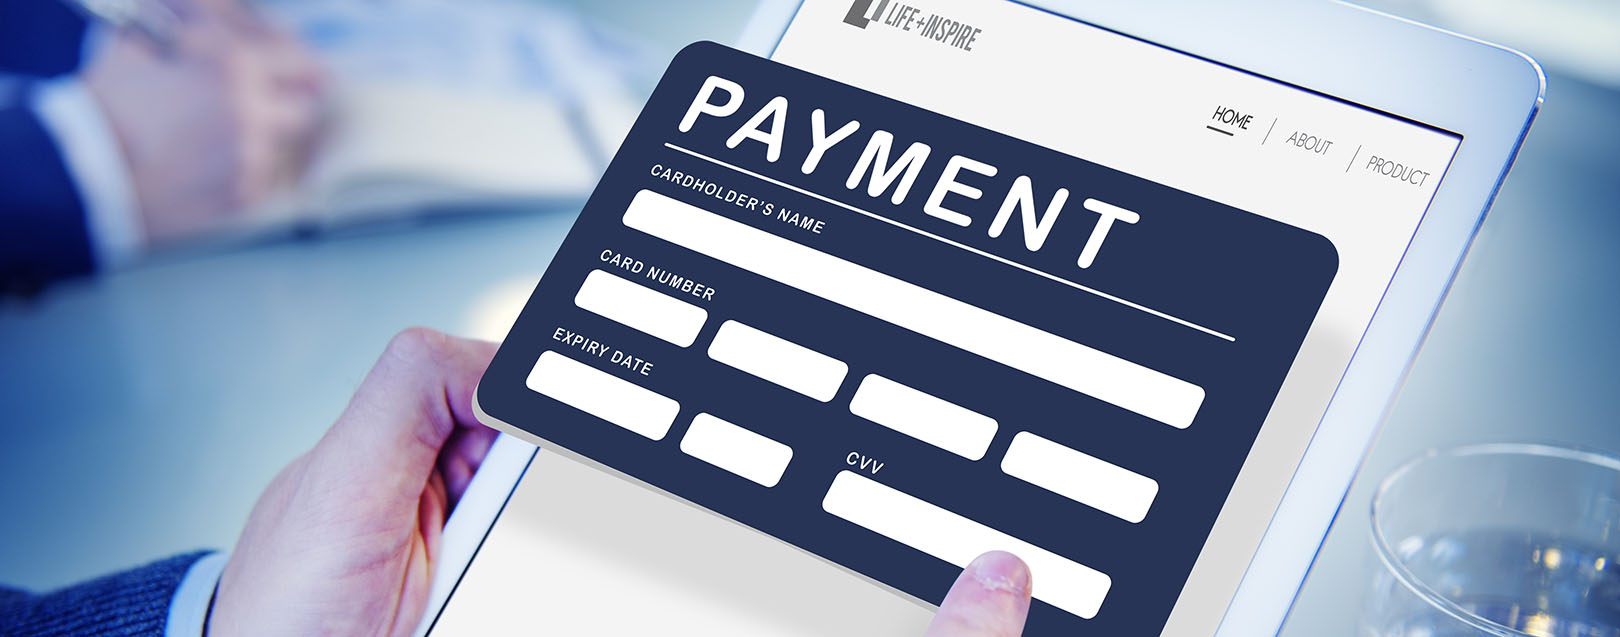 Govt depts must make payments above Rs.5k via e-Payment: Fin Min